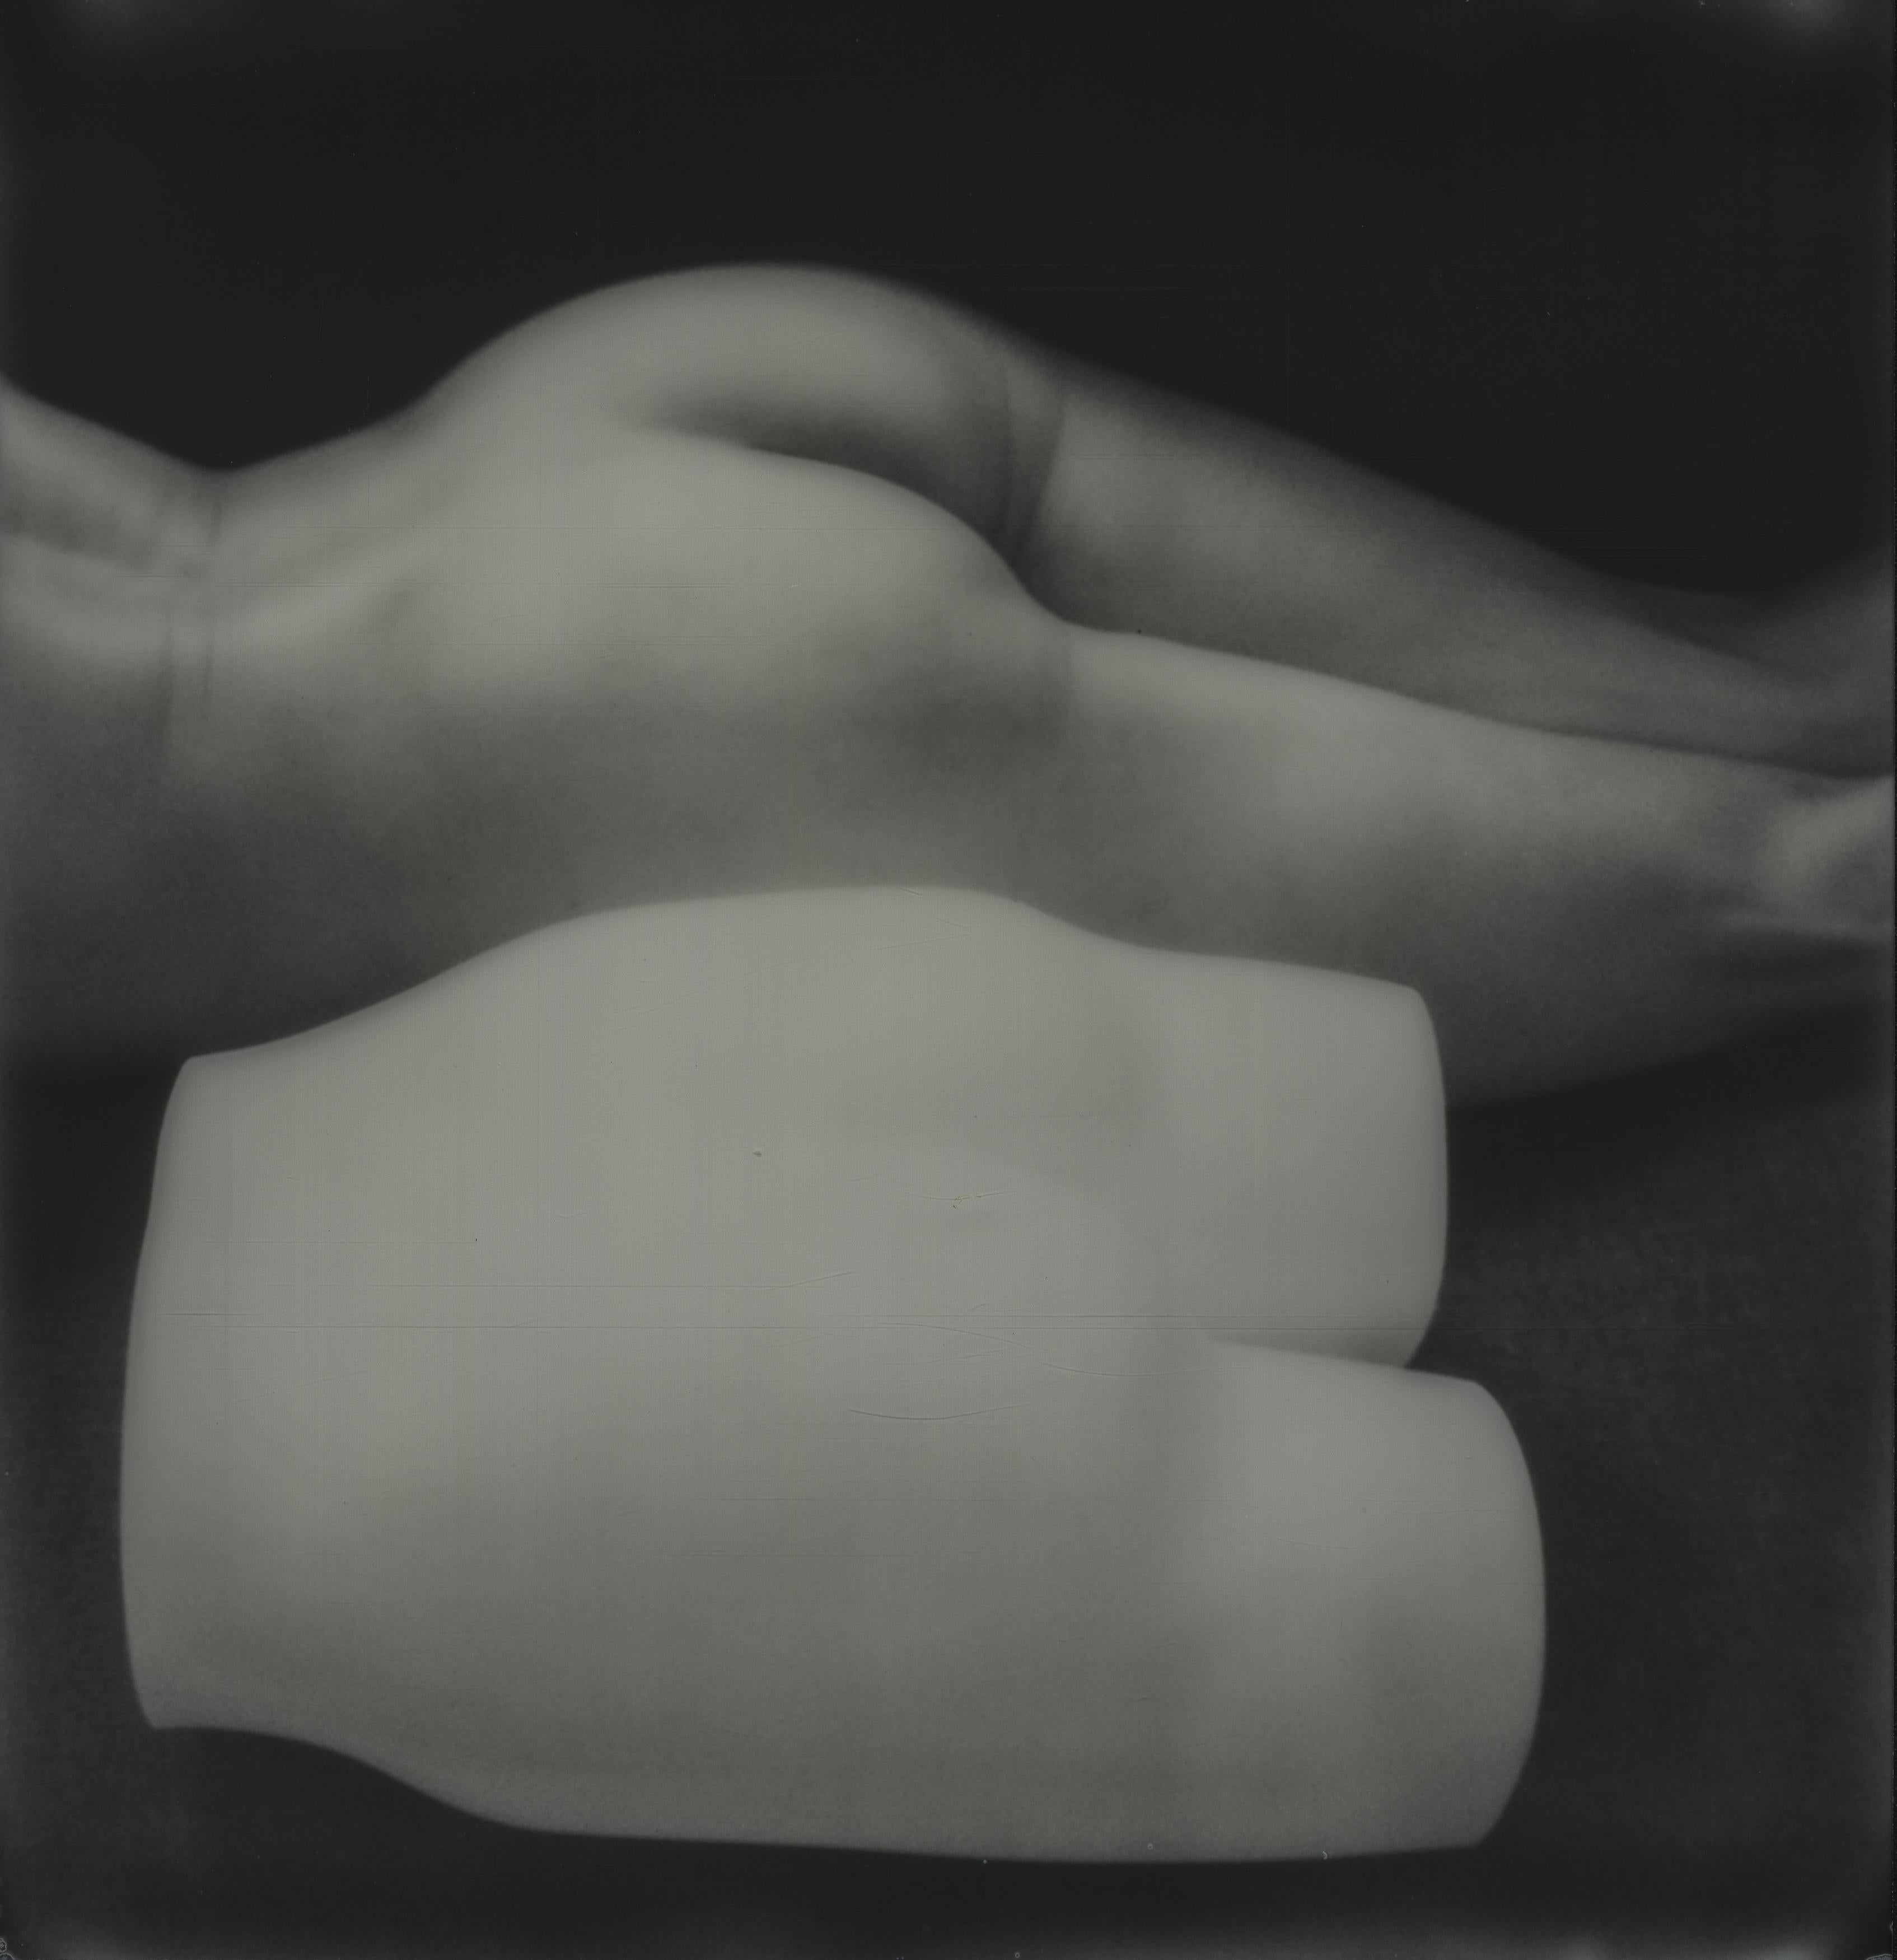 Kirsten Thys van den Audenaerde Nude Photograph - Family affair - Contemporary, Nude, Women, Polaroid, 21st Century